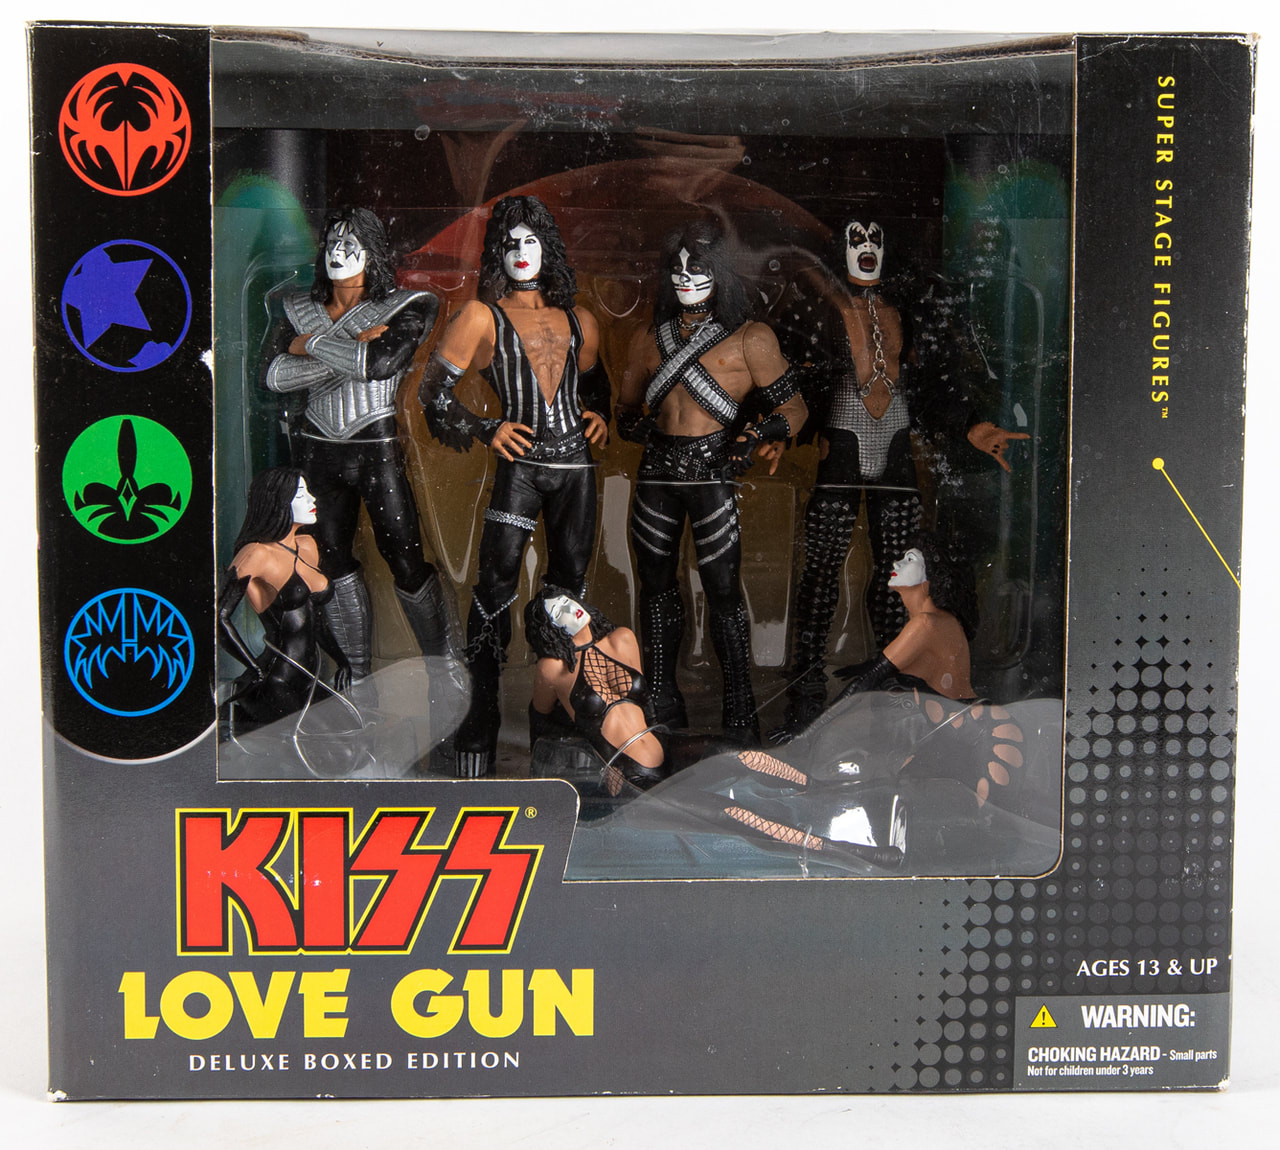 KISS LOVE GUN: DELUXE BOXED EDITION